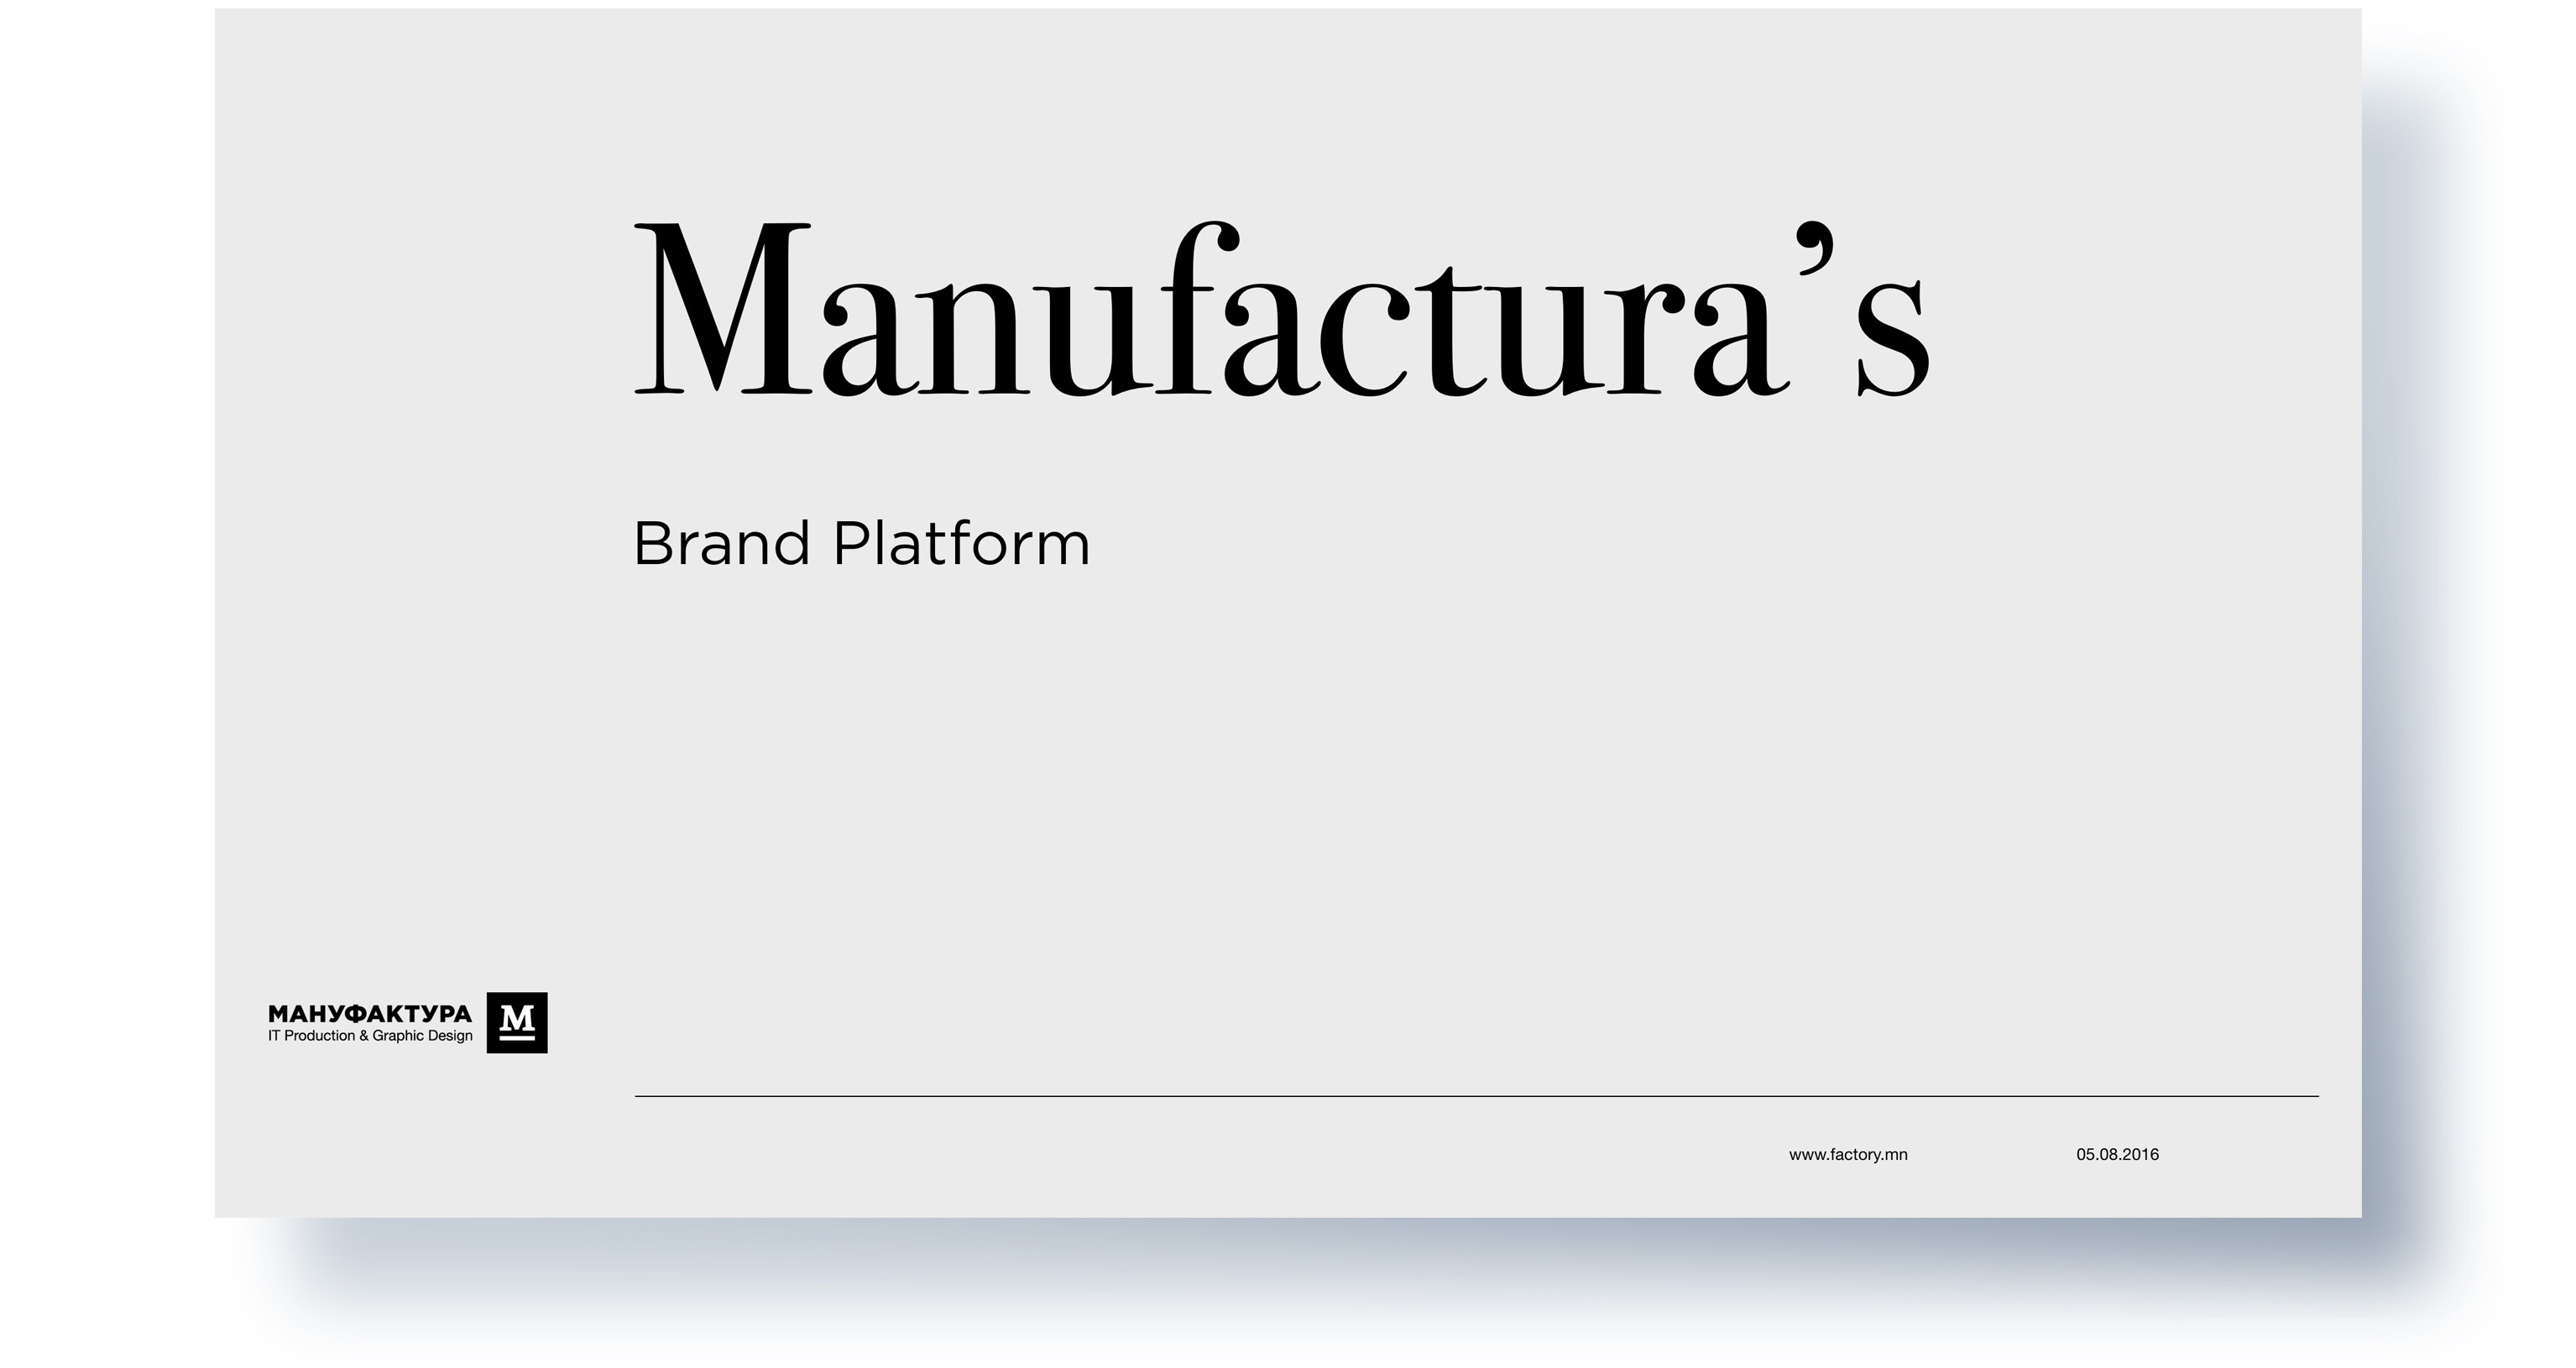 Manufactura’s brand platform